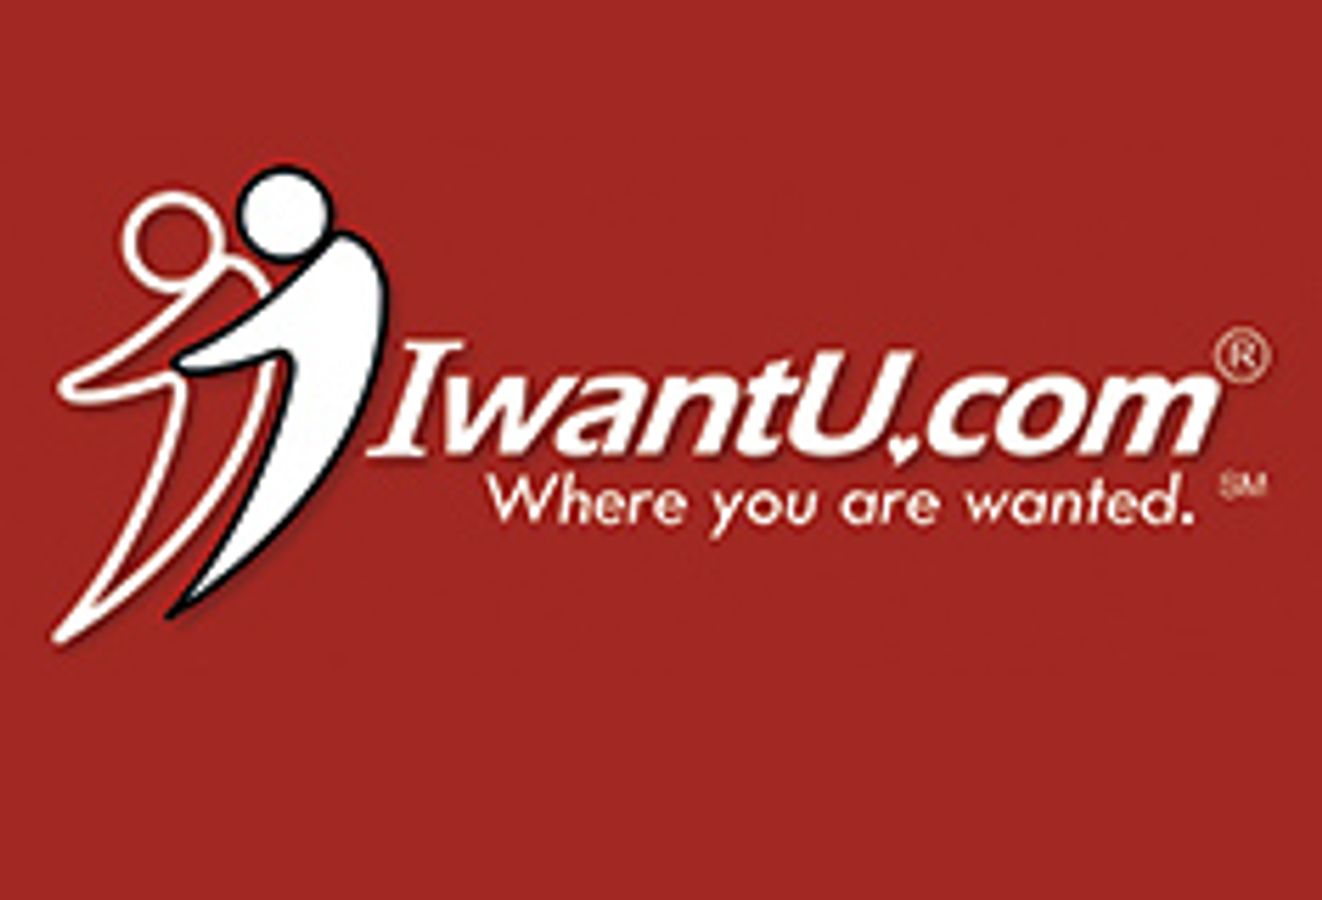 IwantU (use iwantU.com)